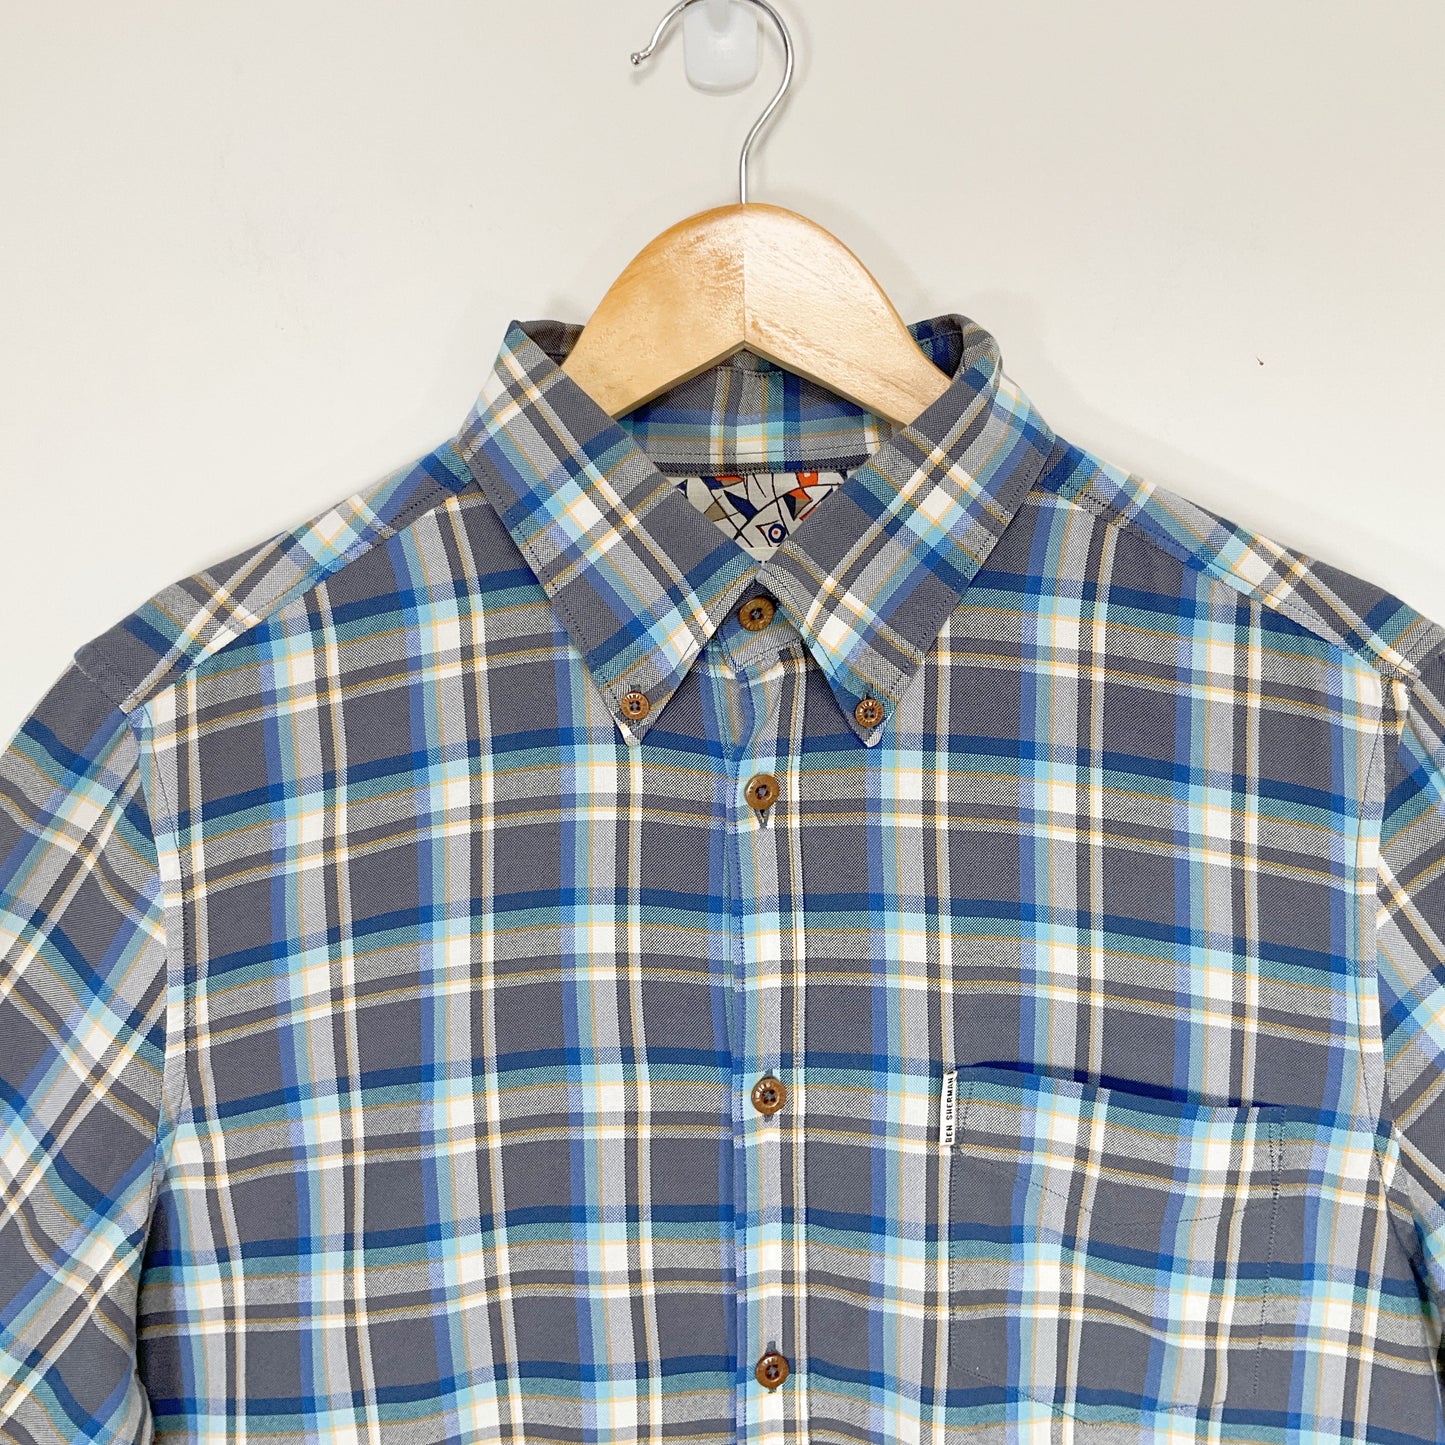 Ben Sherman - Pure Cotton Windowpane Check Shirt